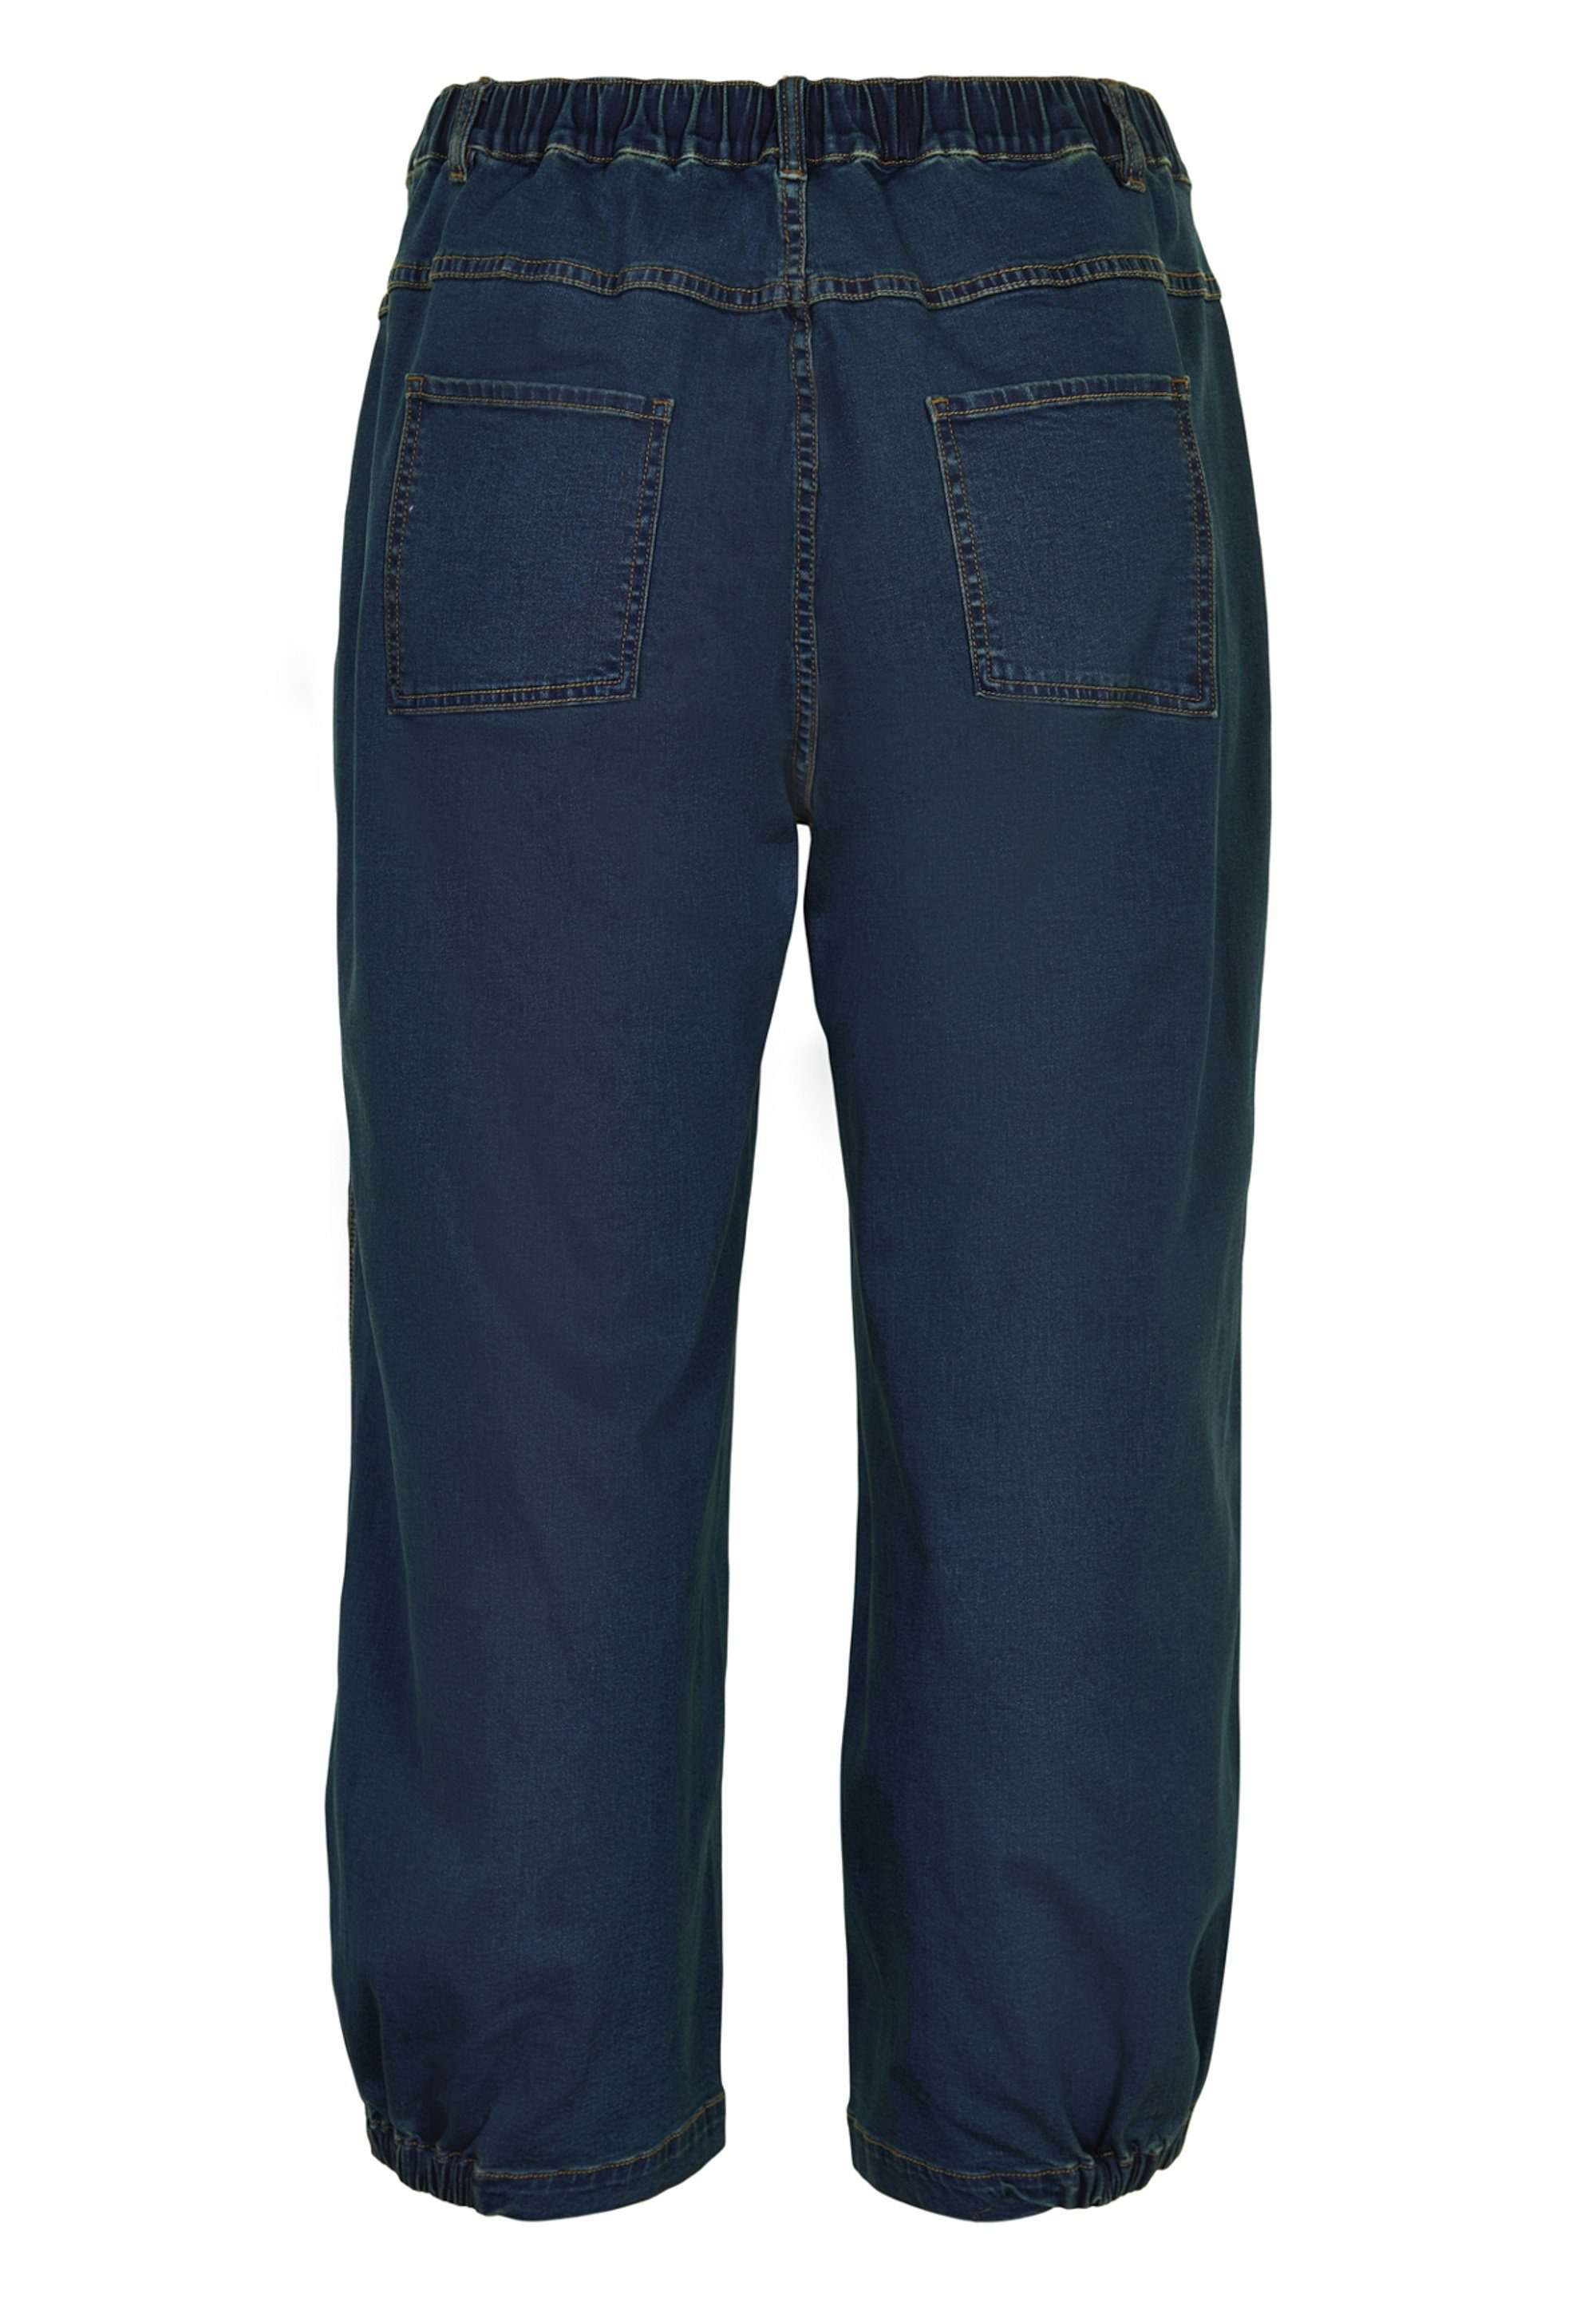 GOZZIP 3/4-Jeans blue Dark Clara design Danish denim